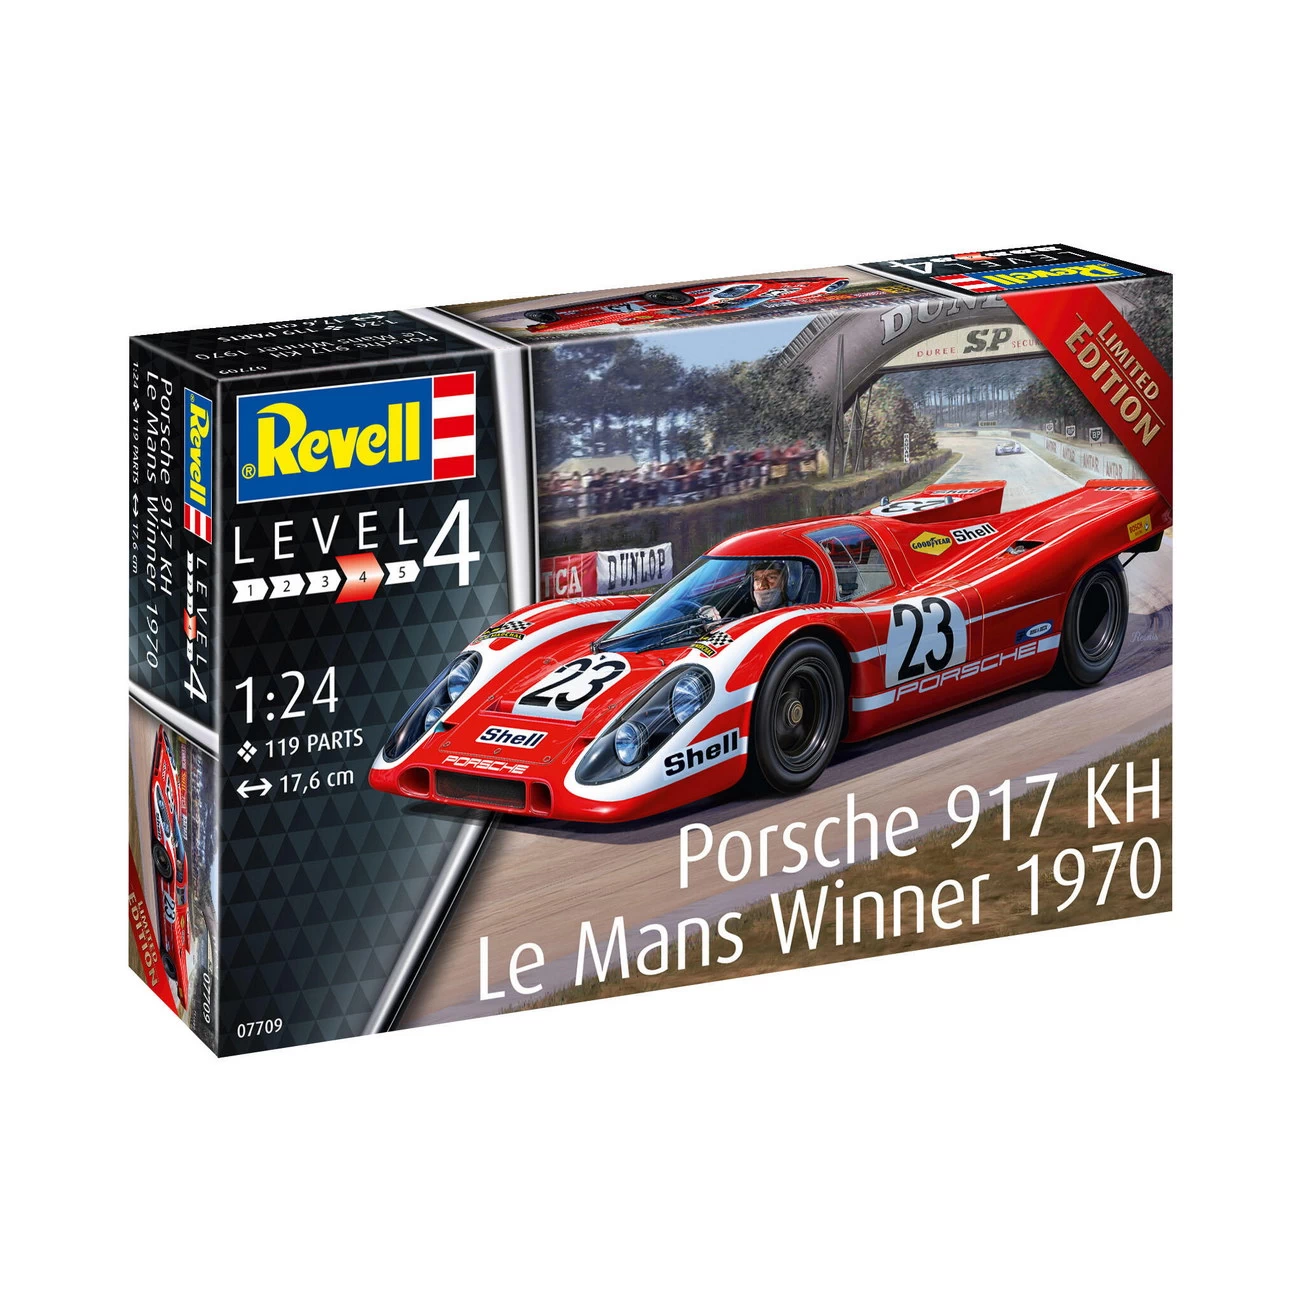 Revell 07709 - Porsche 917 KH Le Mans Winner 1970 - Limited Edition